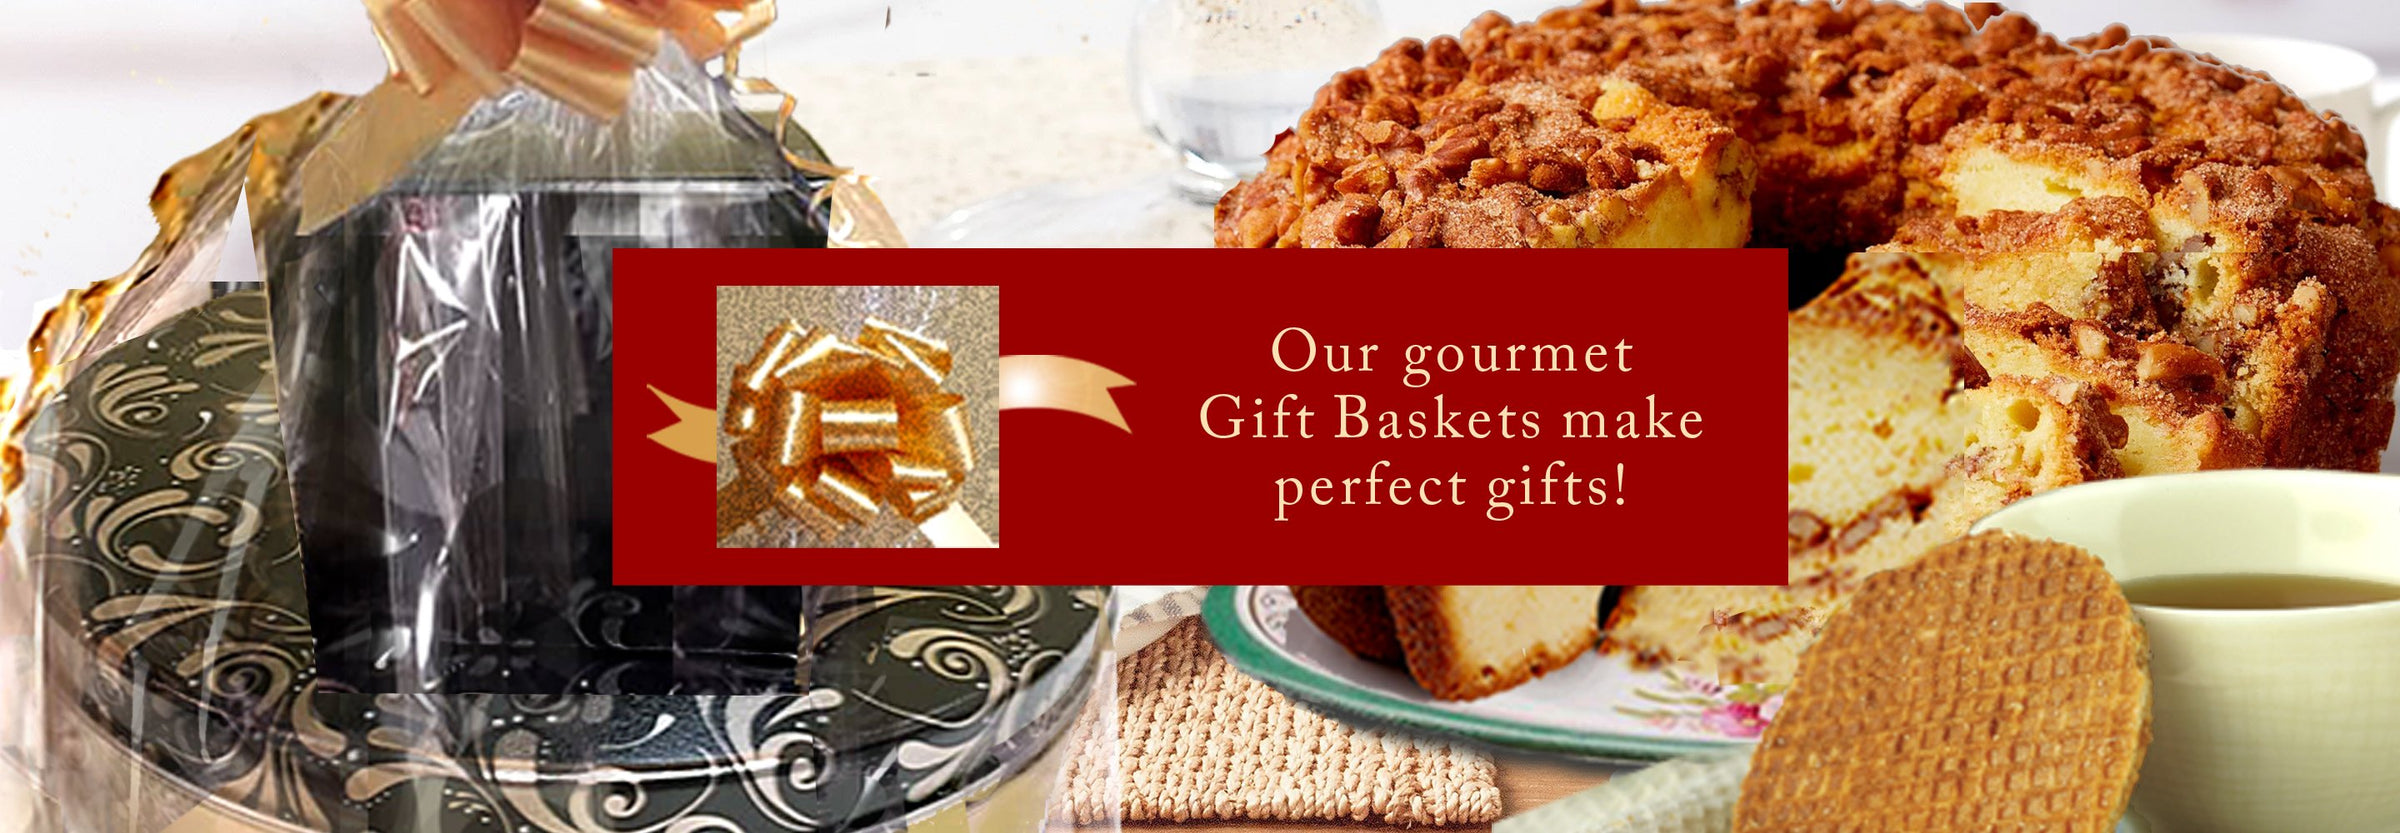 Coffee Cake Gifts & Gift Baskets